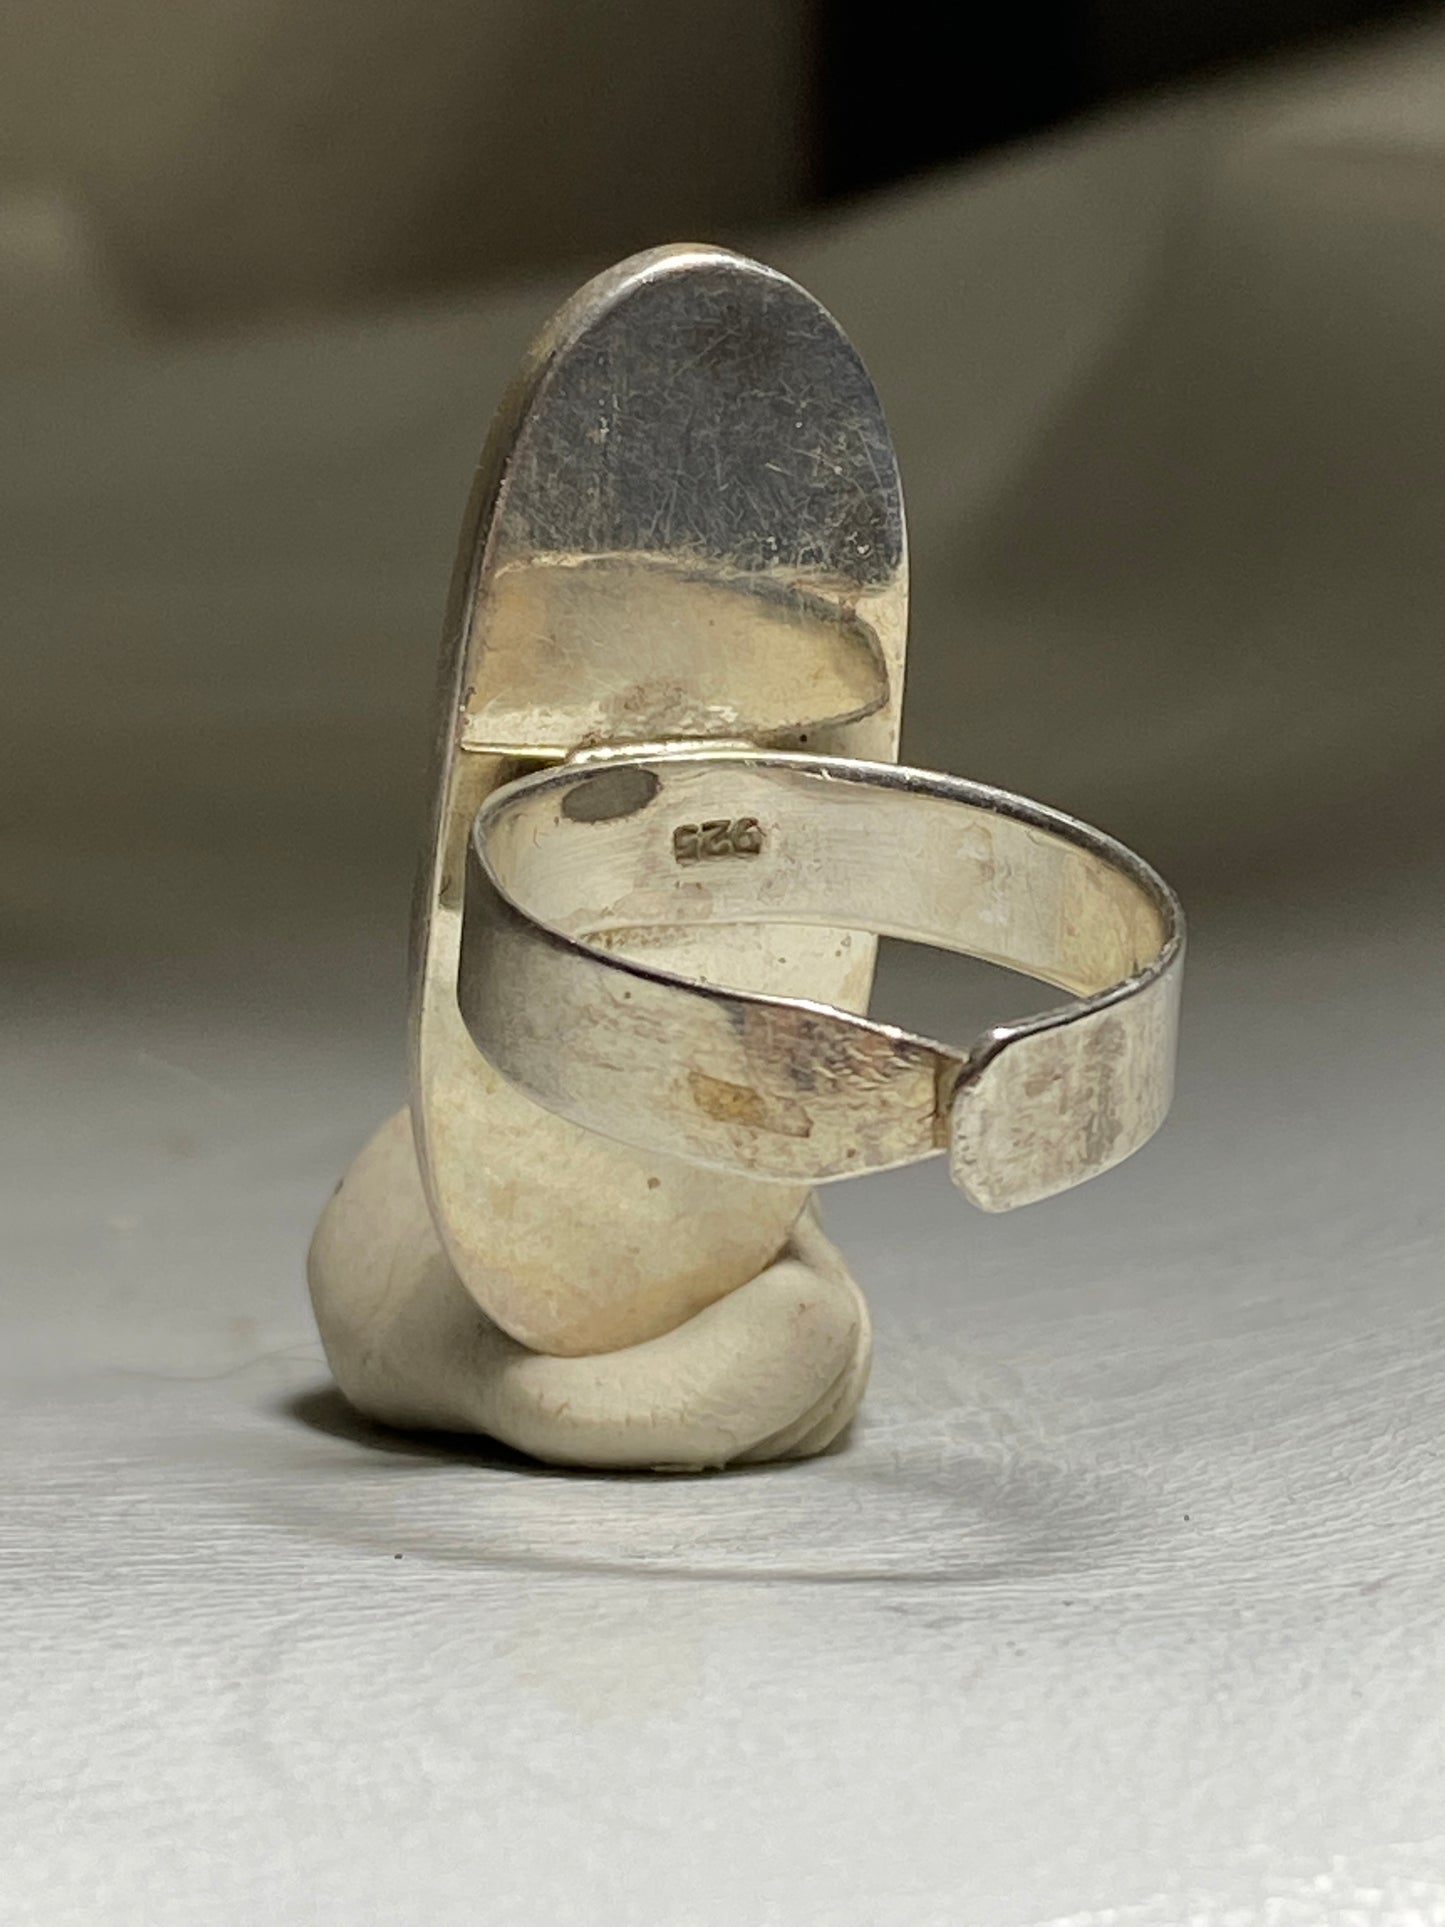 abalone ring long southwest women sterling silver  adjustable